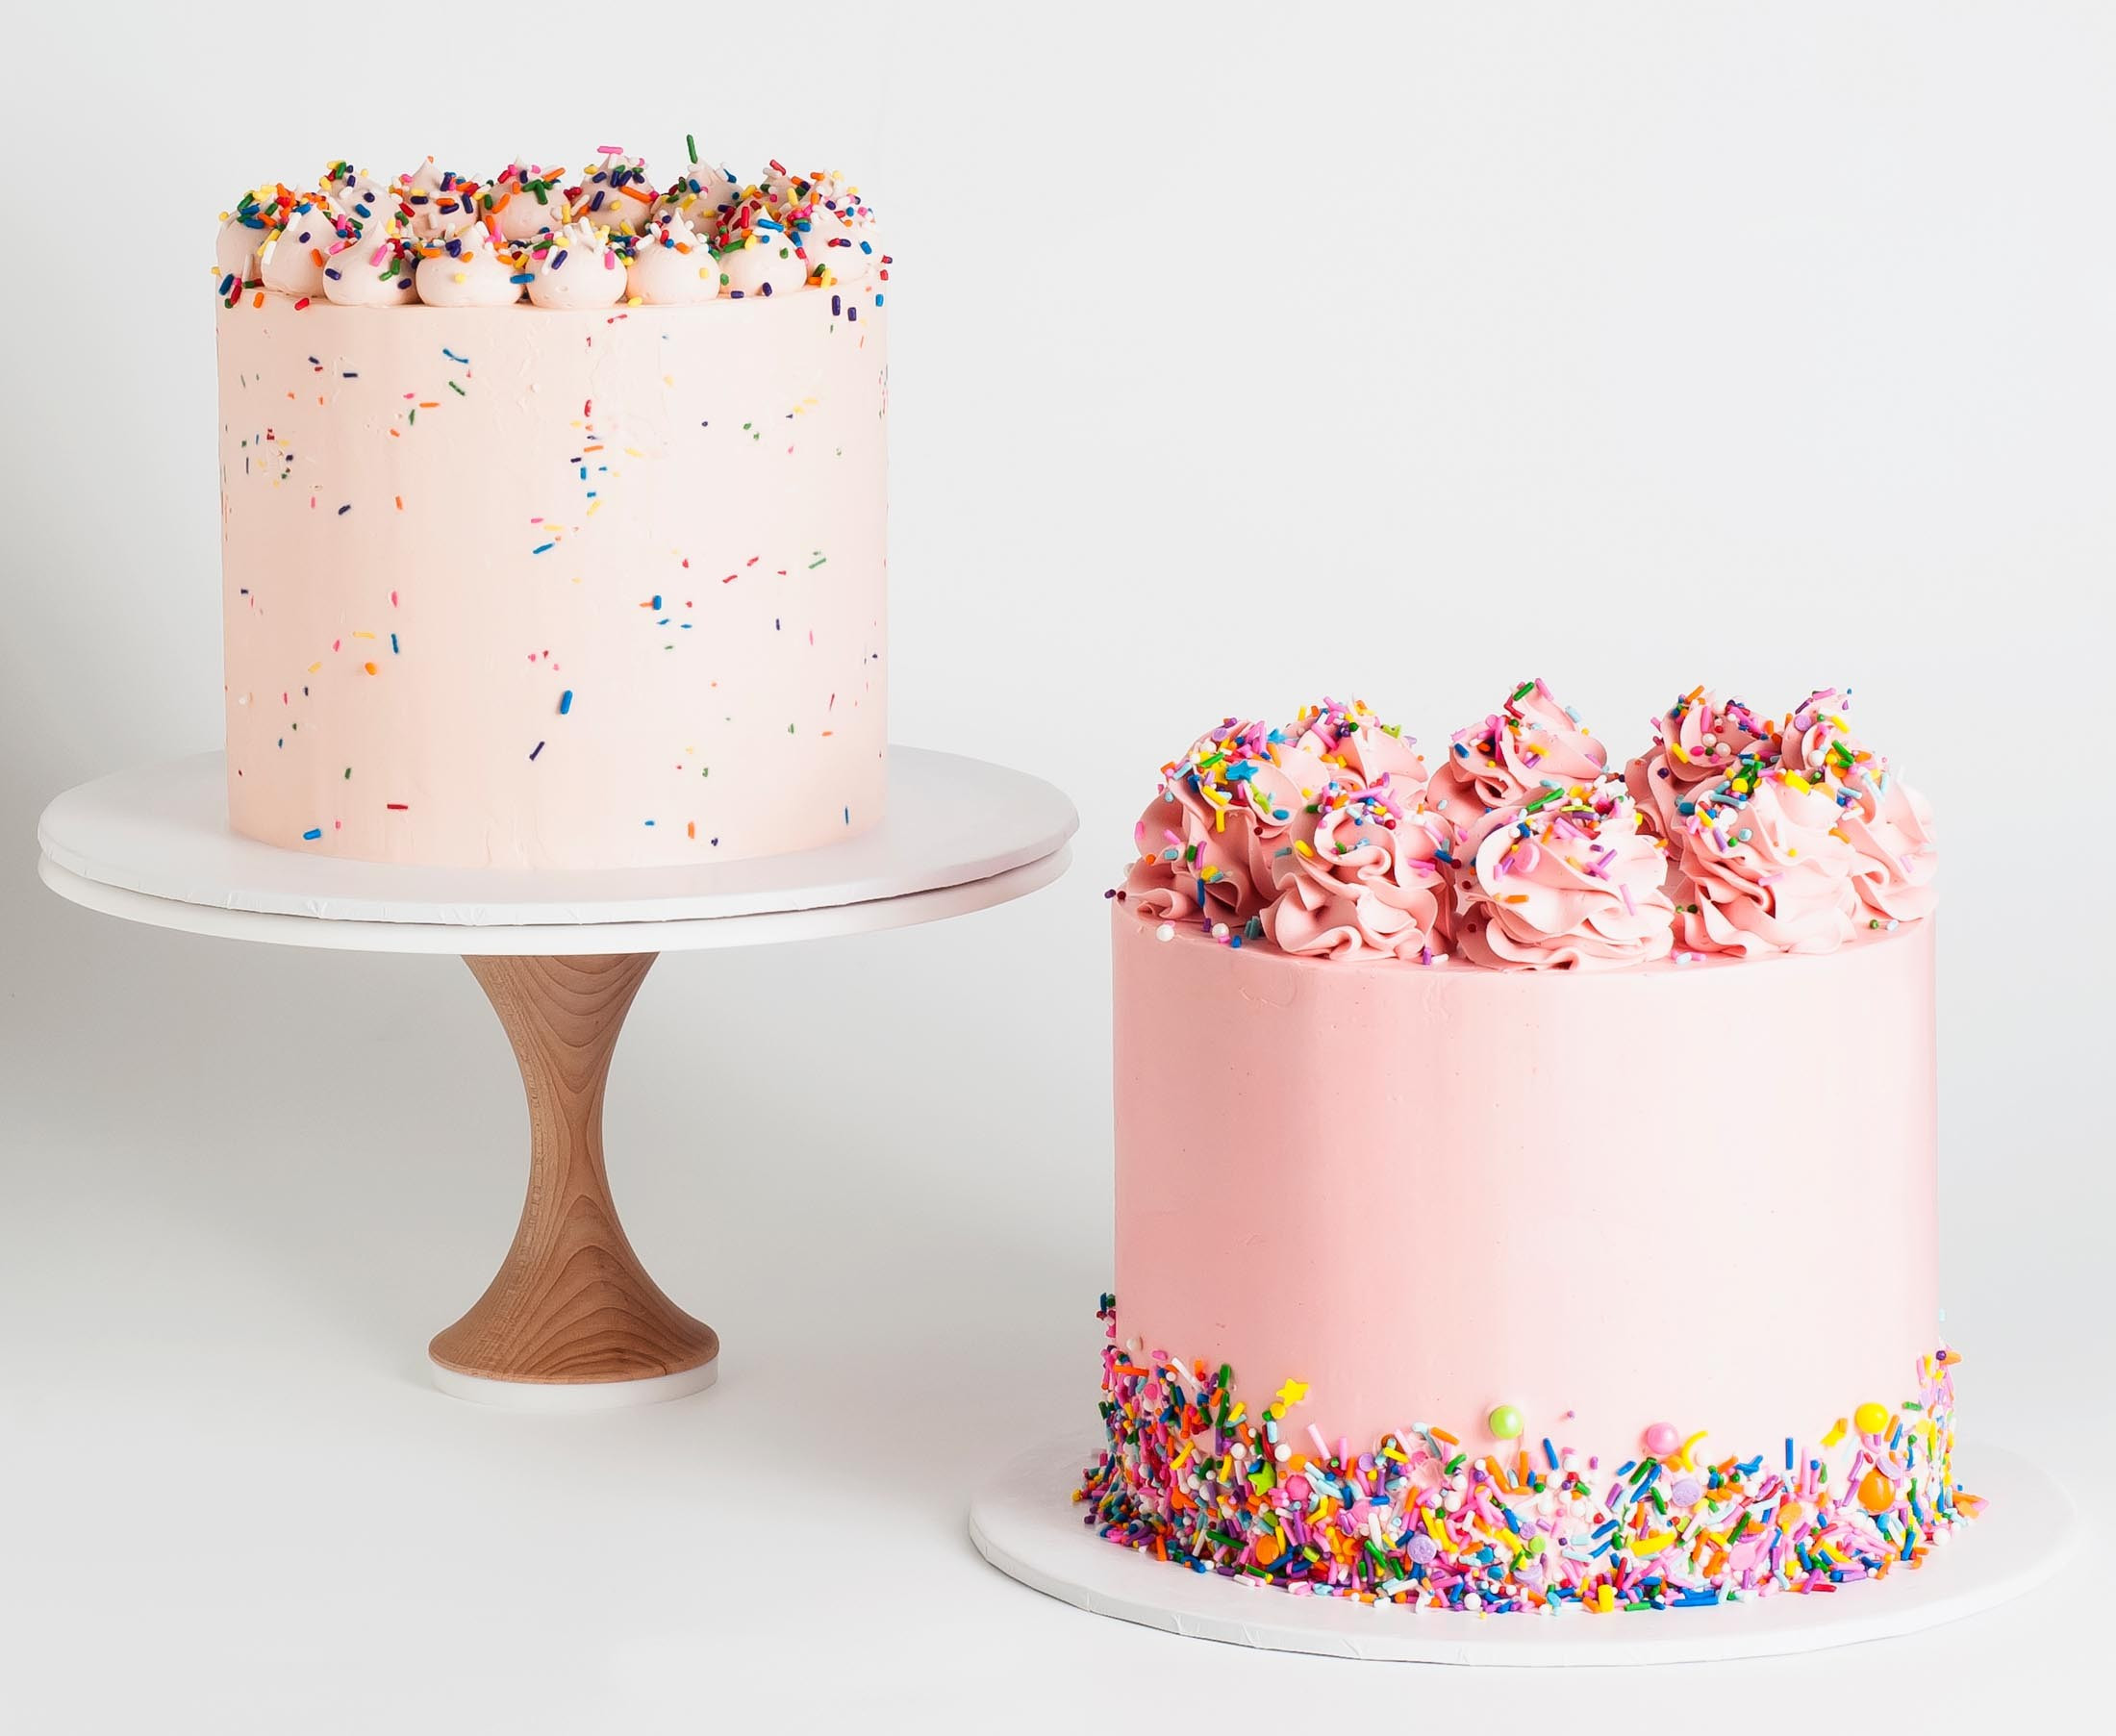 Pics Of Birthday Cakes
 Sprinkle birthday cake